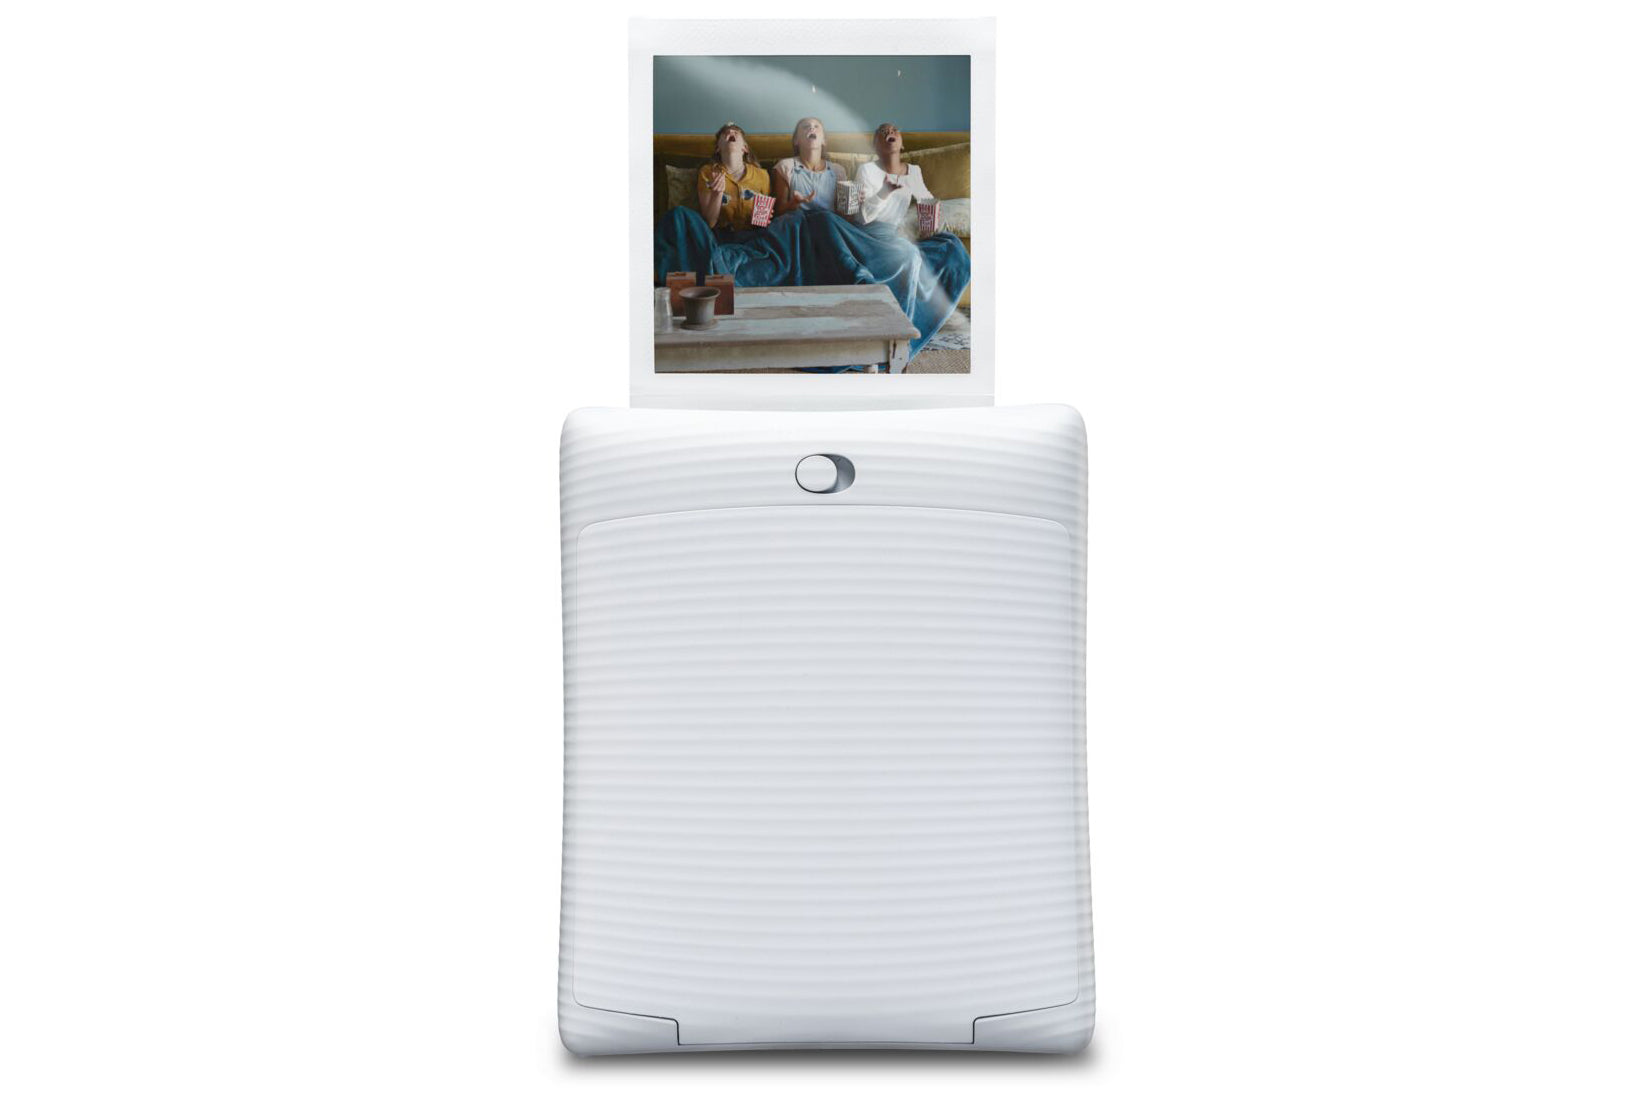 Fujifilm Instax Square Link Wireless Smartphone Photo Printer - White - maplin.co.uk